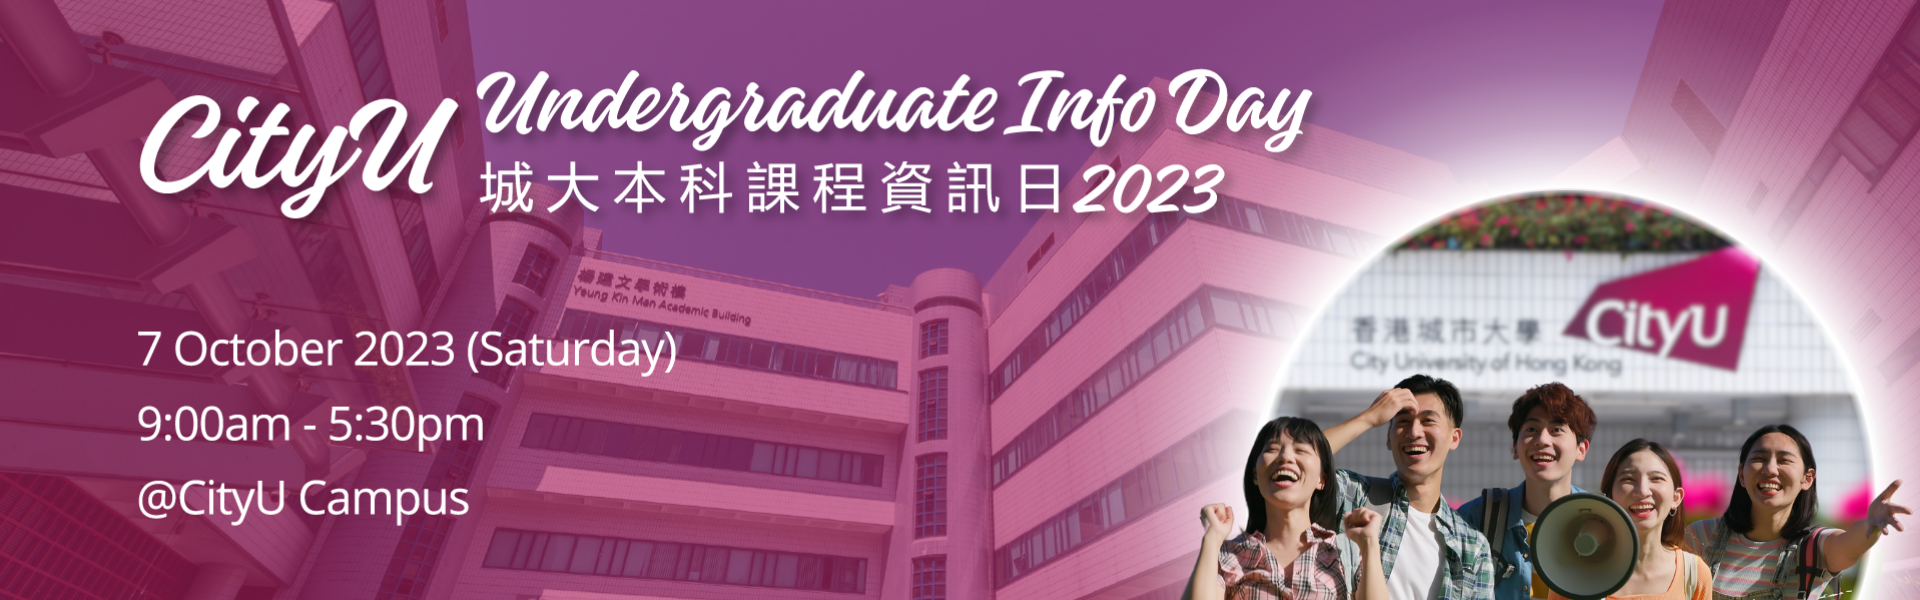 CityU Undergraduate Information Day 2023